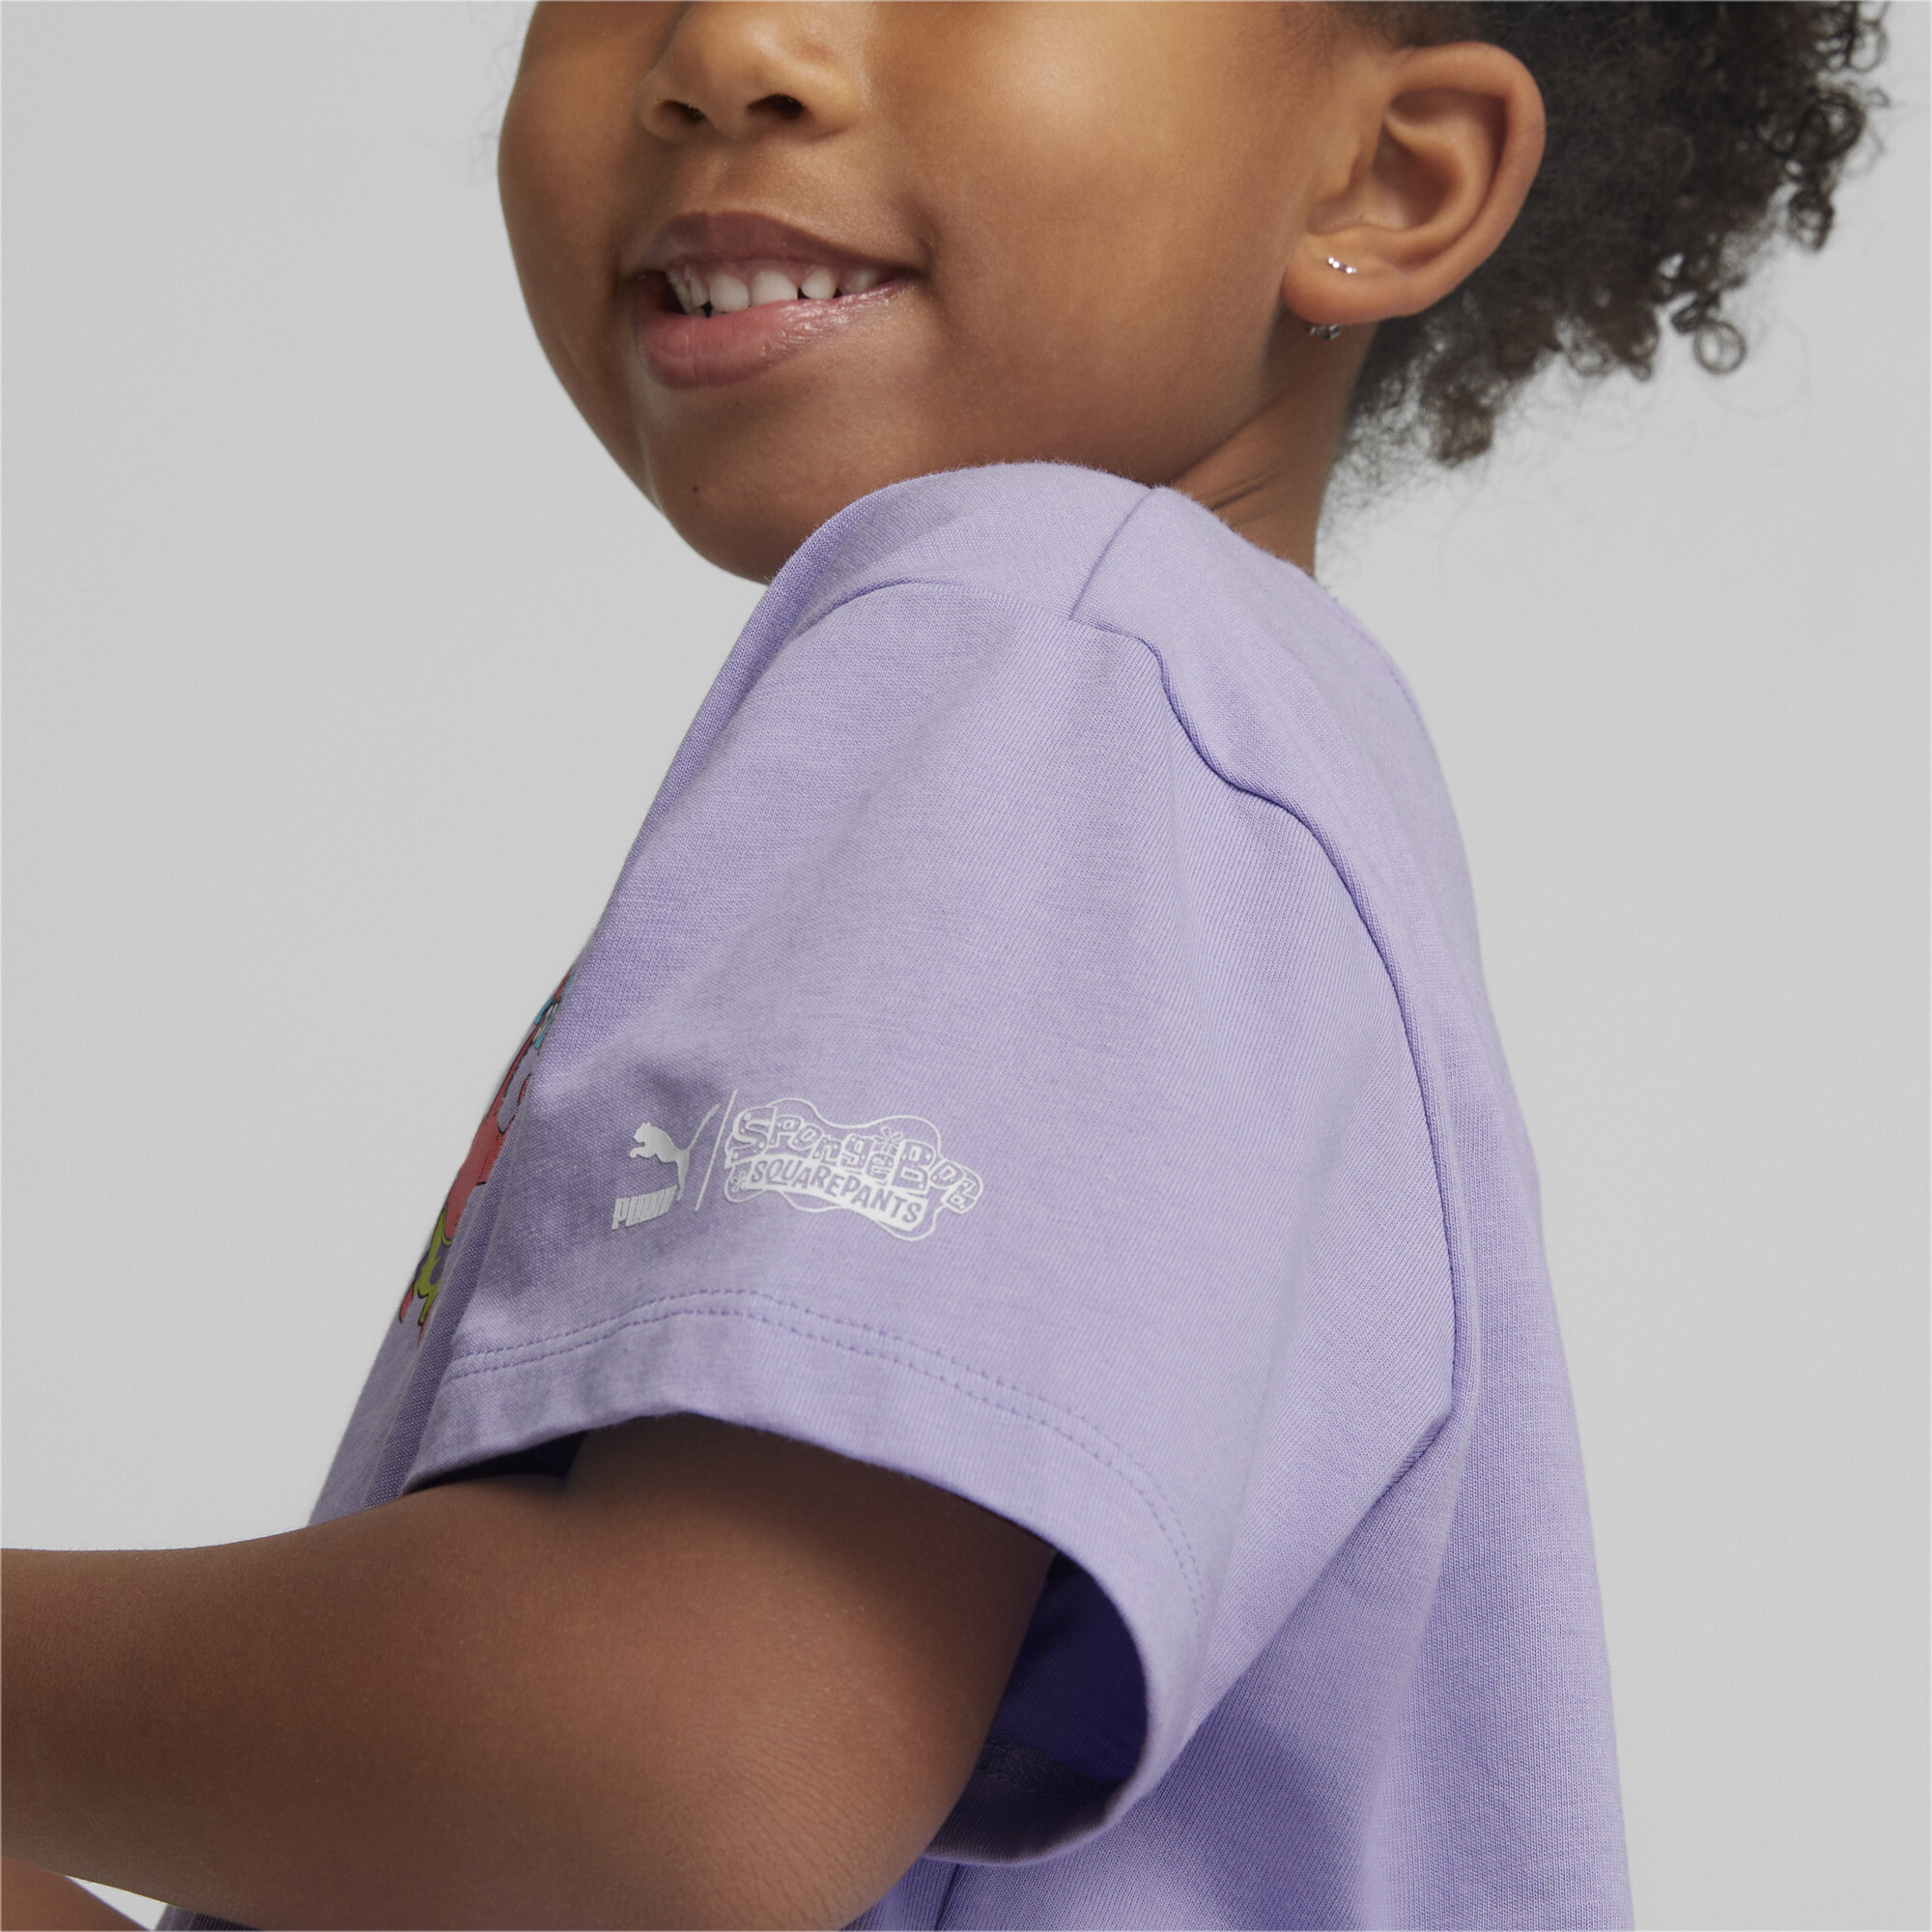 PUMA X SPONGEBOB T-Shirt Kids In Purple, Size 1-2 Youth